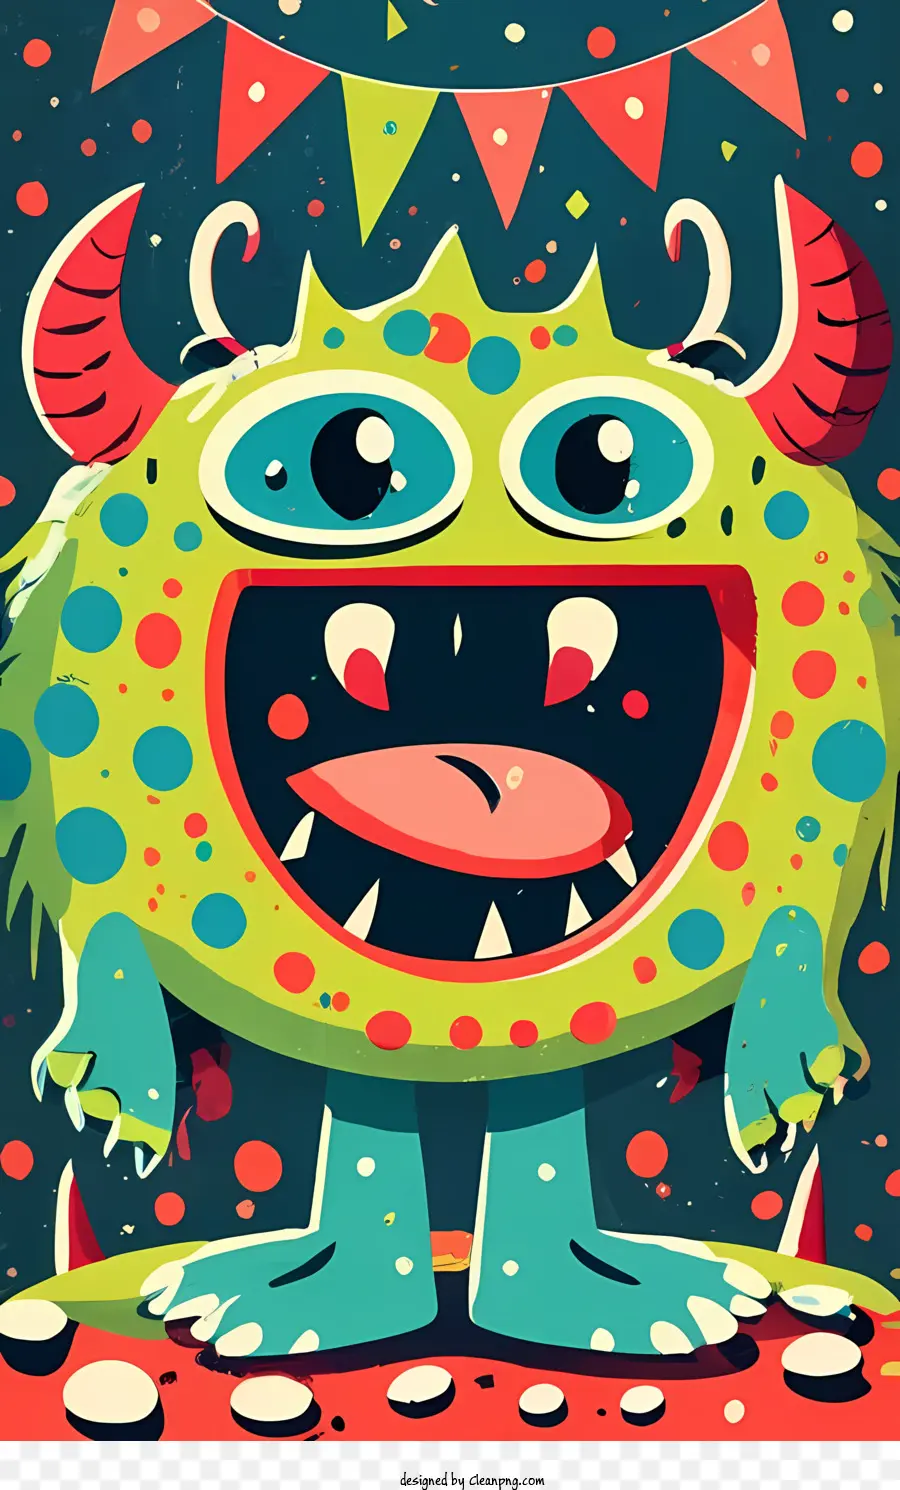 Cartoon Monster Cute Coinful Playful Cartoonish - 